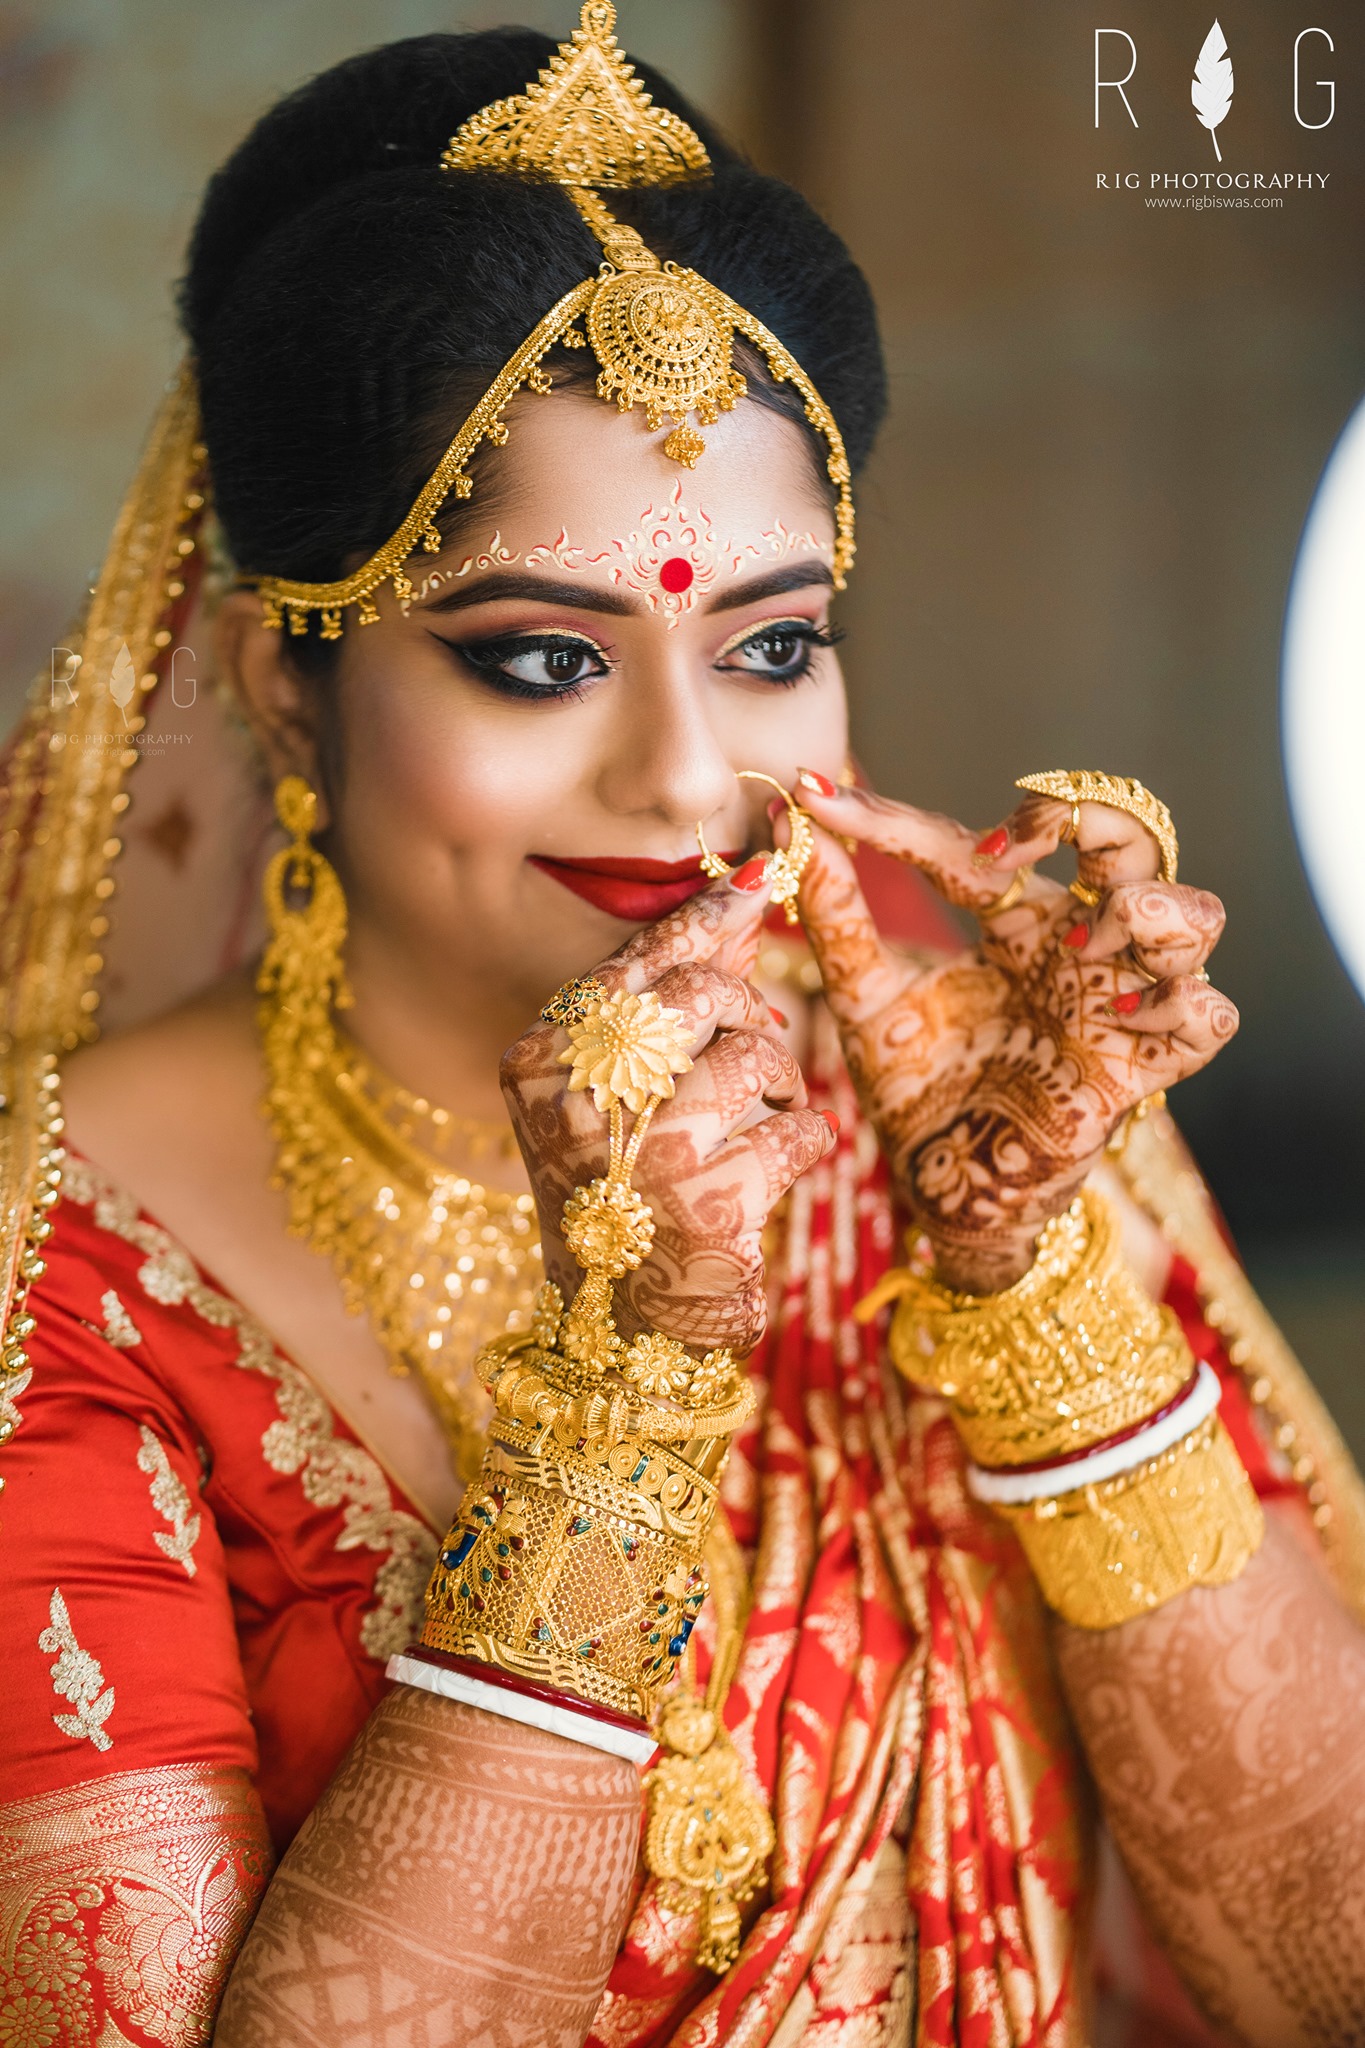 Hindu Wedding Photography Poses  Beautiful Poses For A Hindu Bride